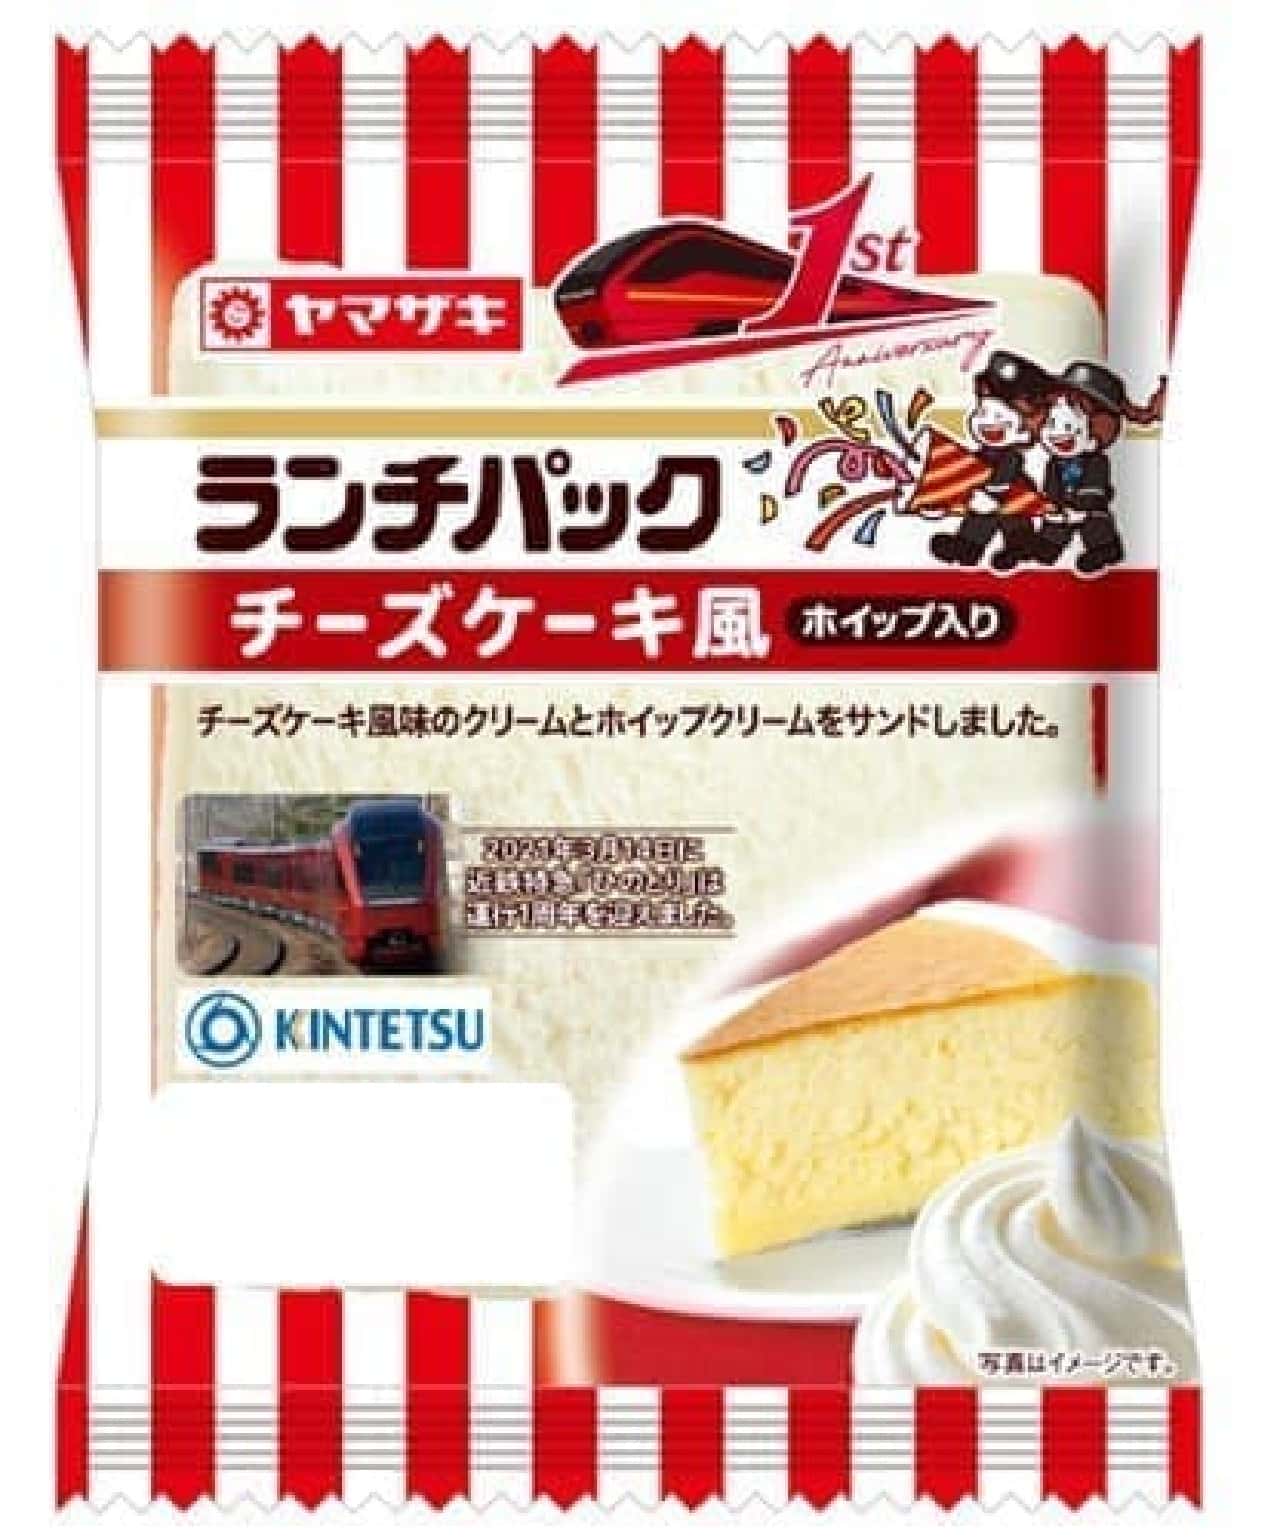 Yamazaki "Lunch Pack Cheesecake Style (with whipped cream)"